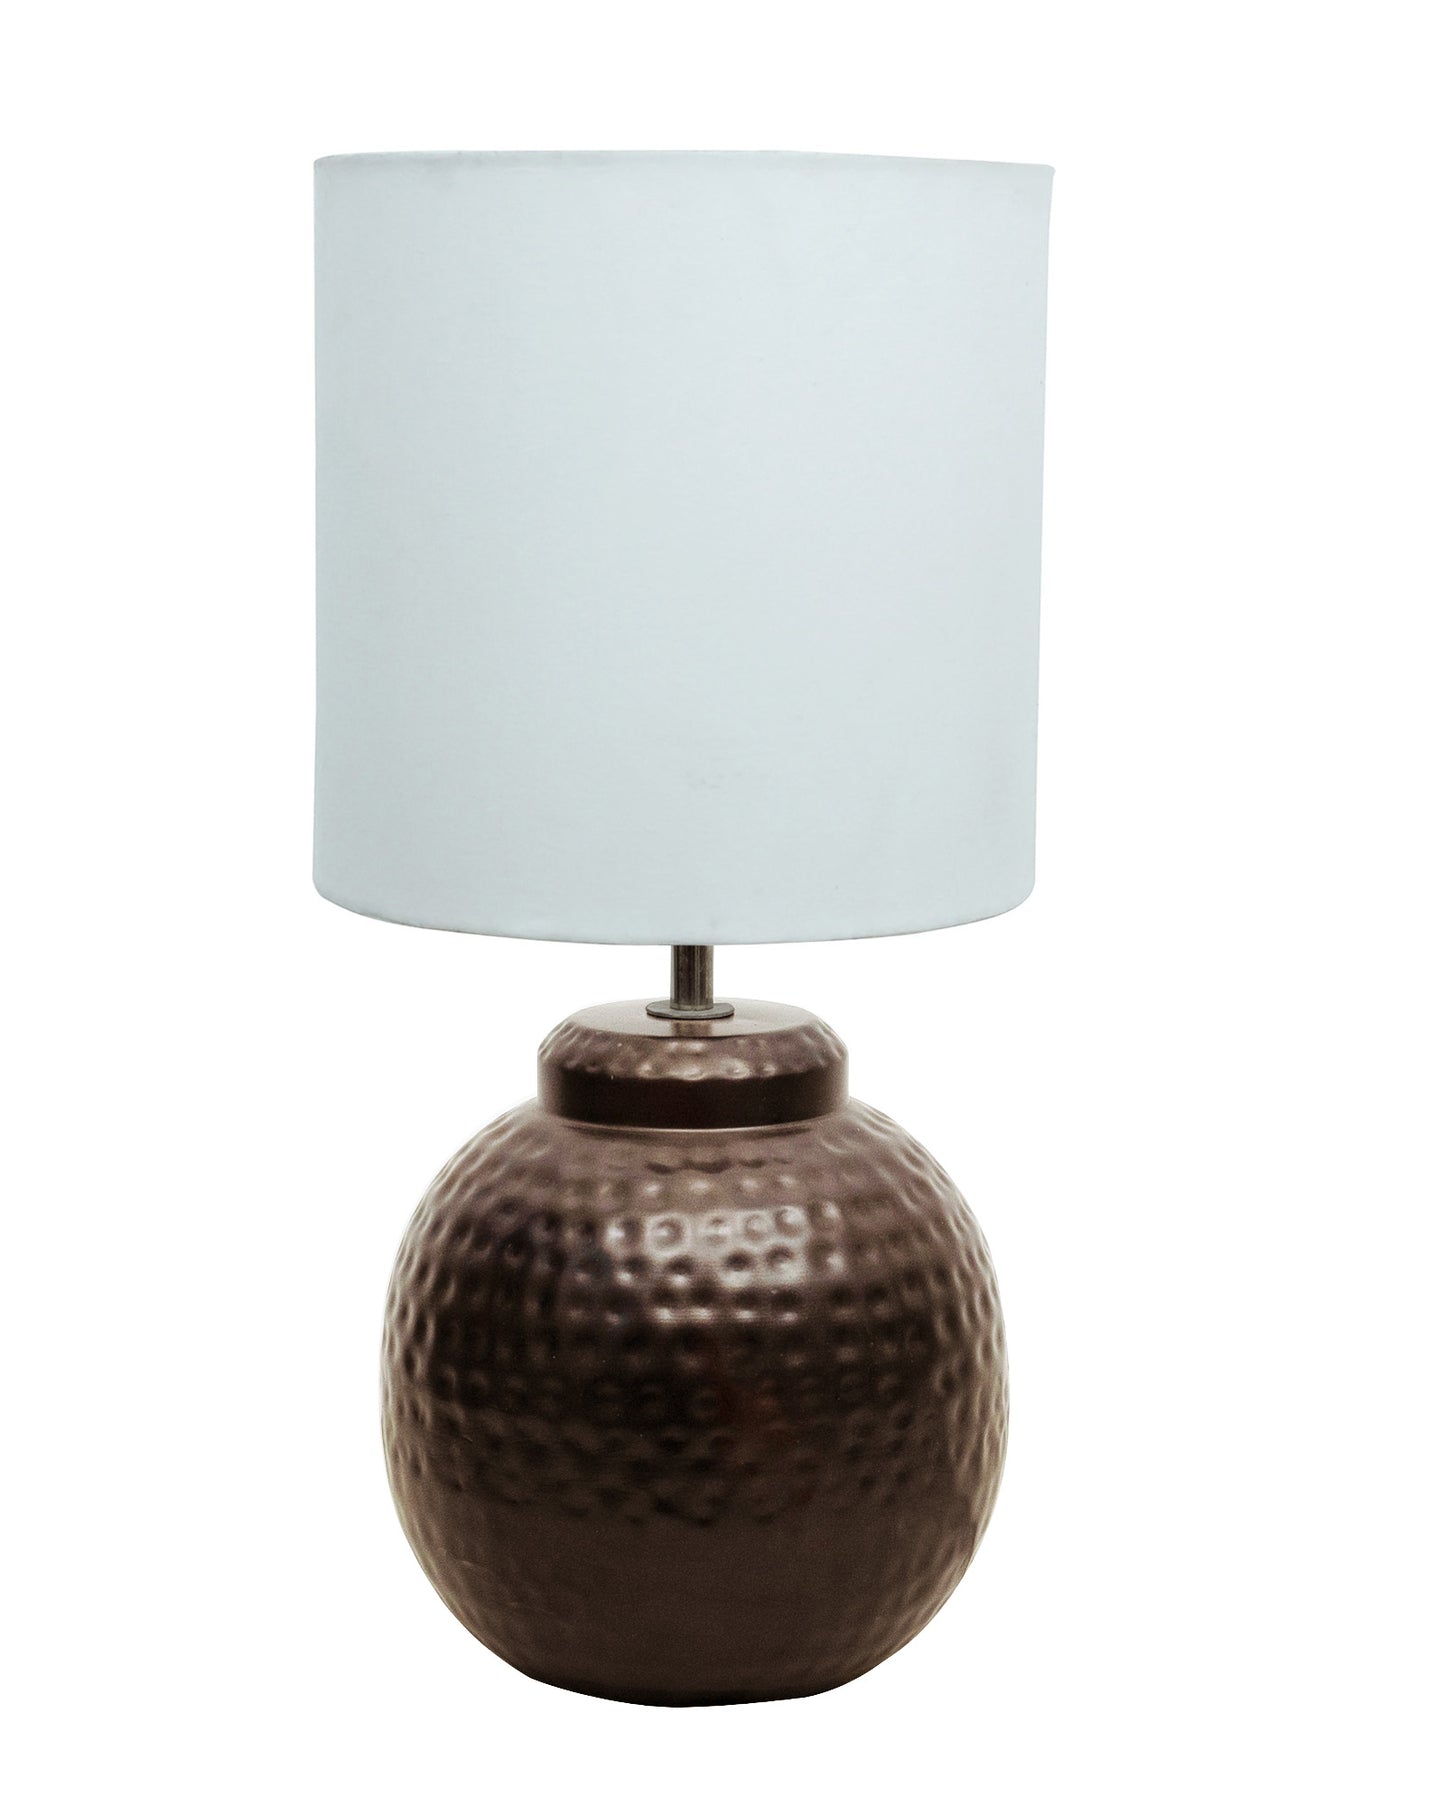 Ginger Jar Antique Table Lamp Hammered Antique Copper Metal for Living Room Family Bedroom